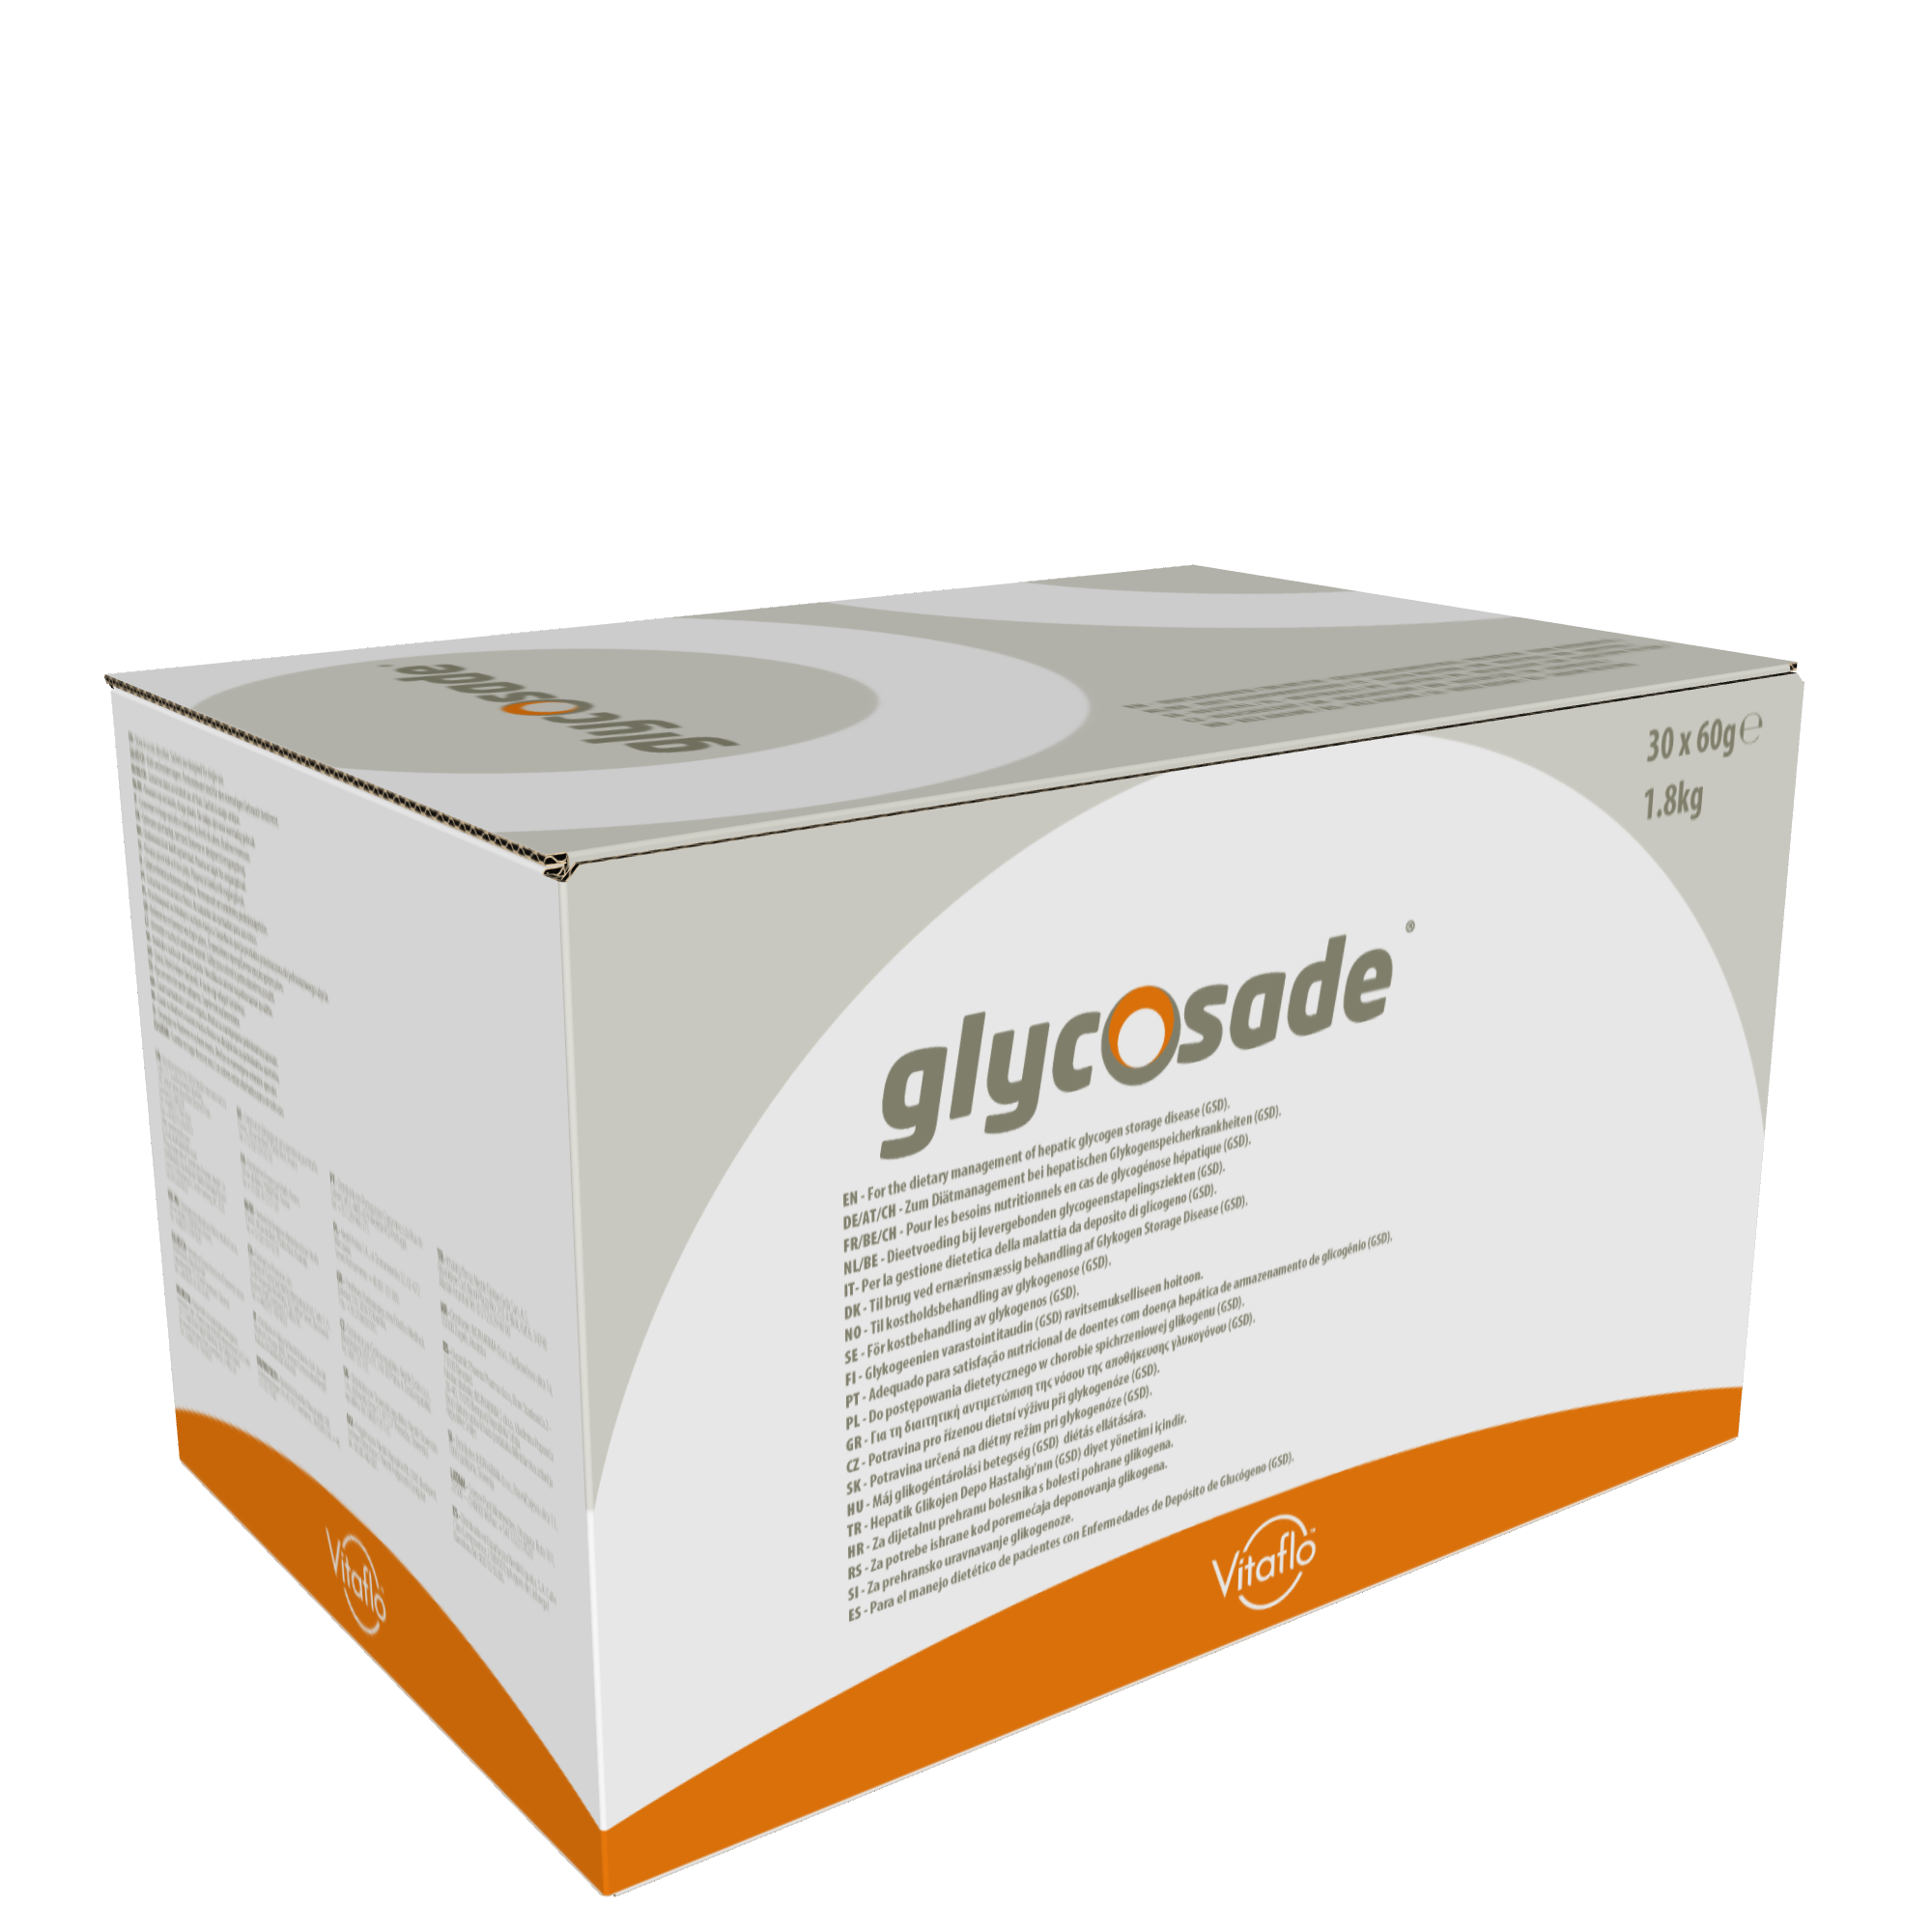 glycosade box